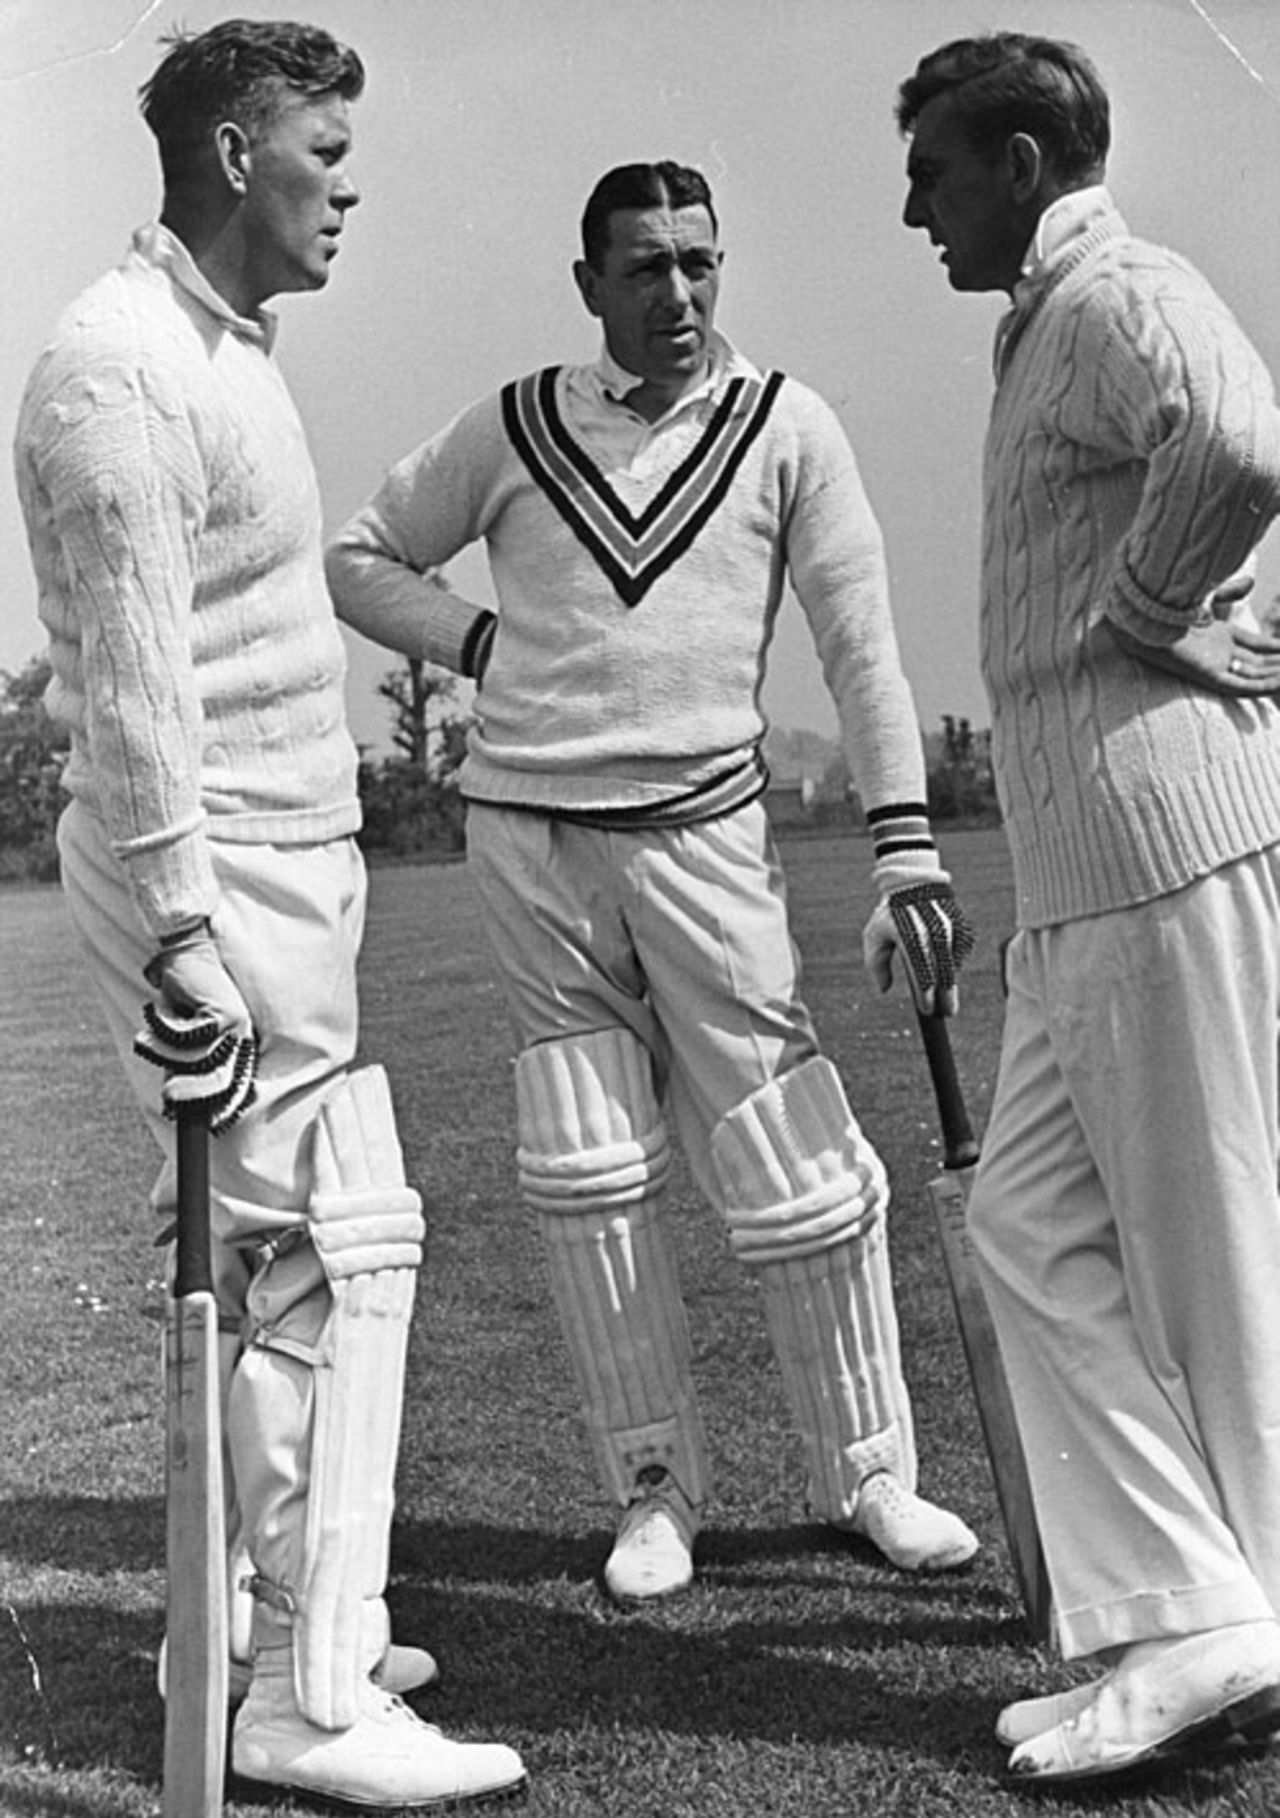 Jim Smith, Arthur Wellard and Alan Watt in a discussion, 1955